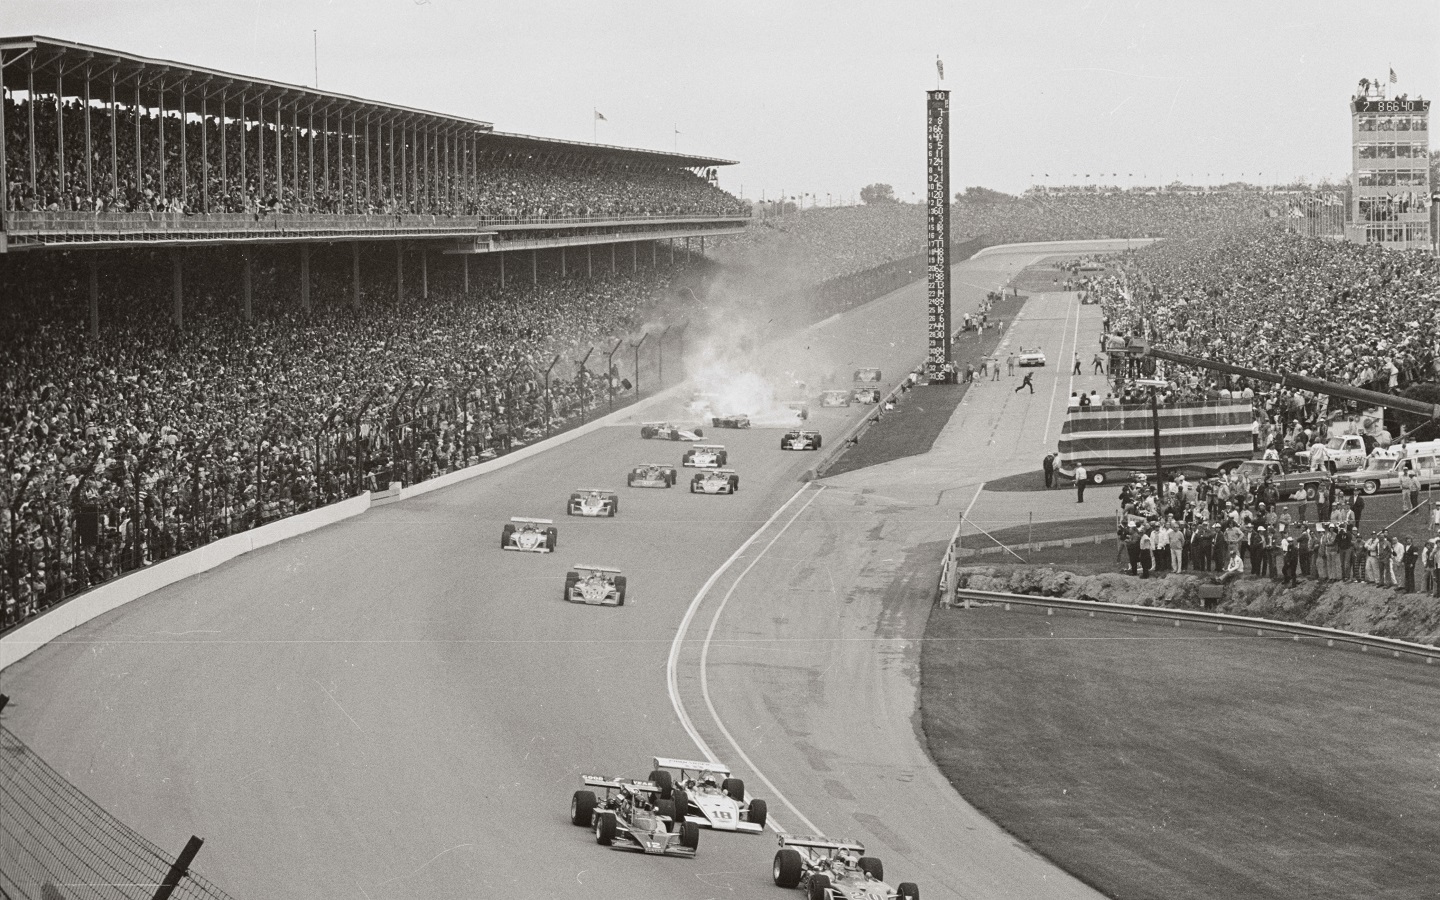 Salt Walther's crash at the 1973 Indianapolis 500